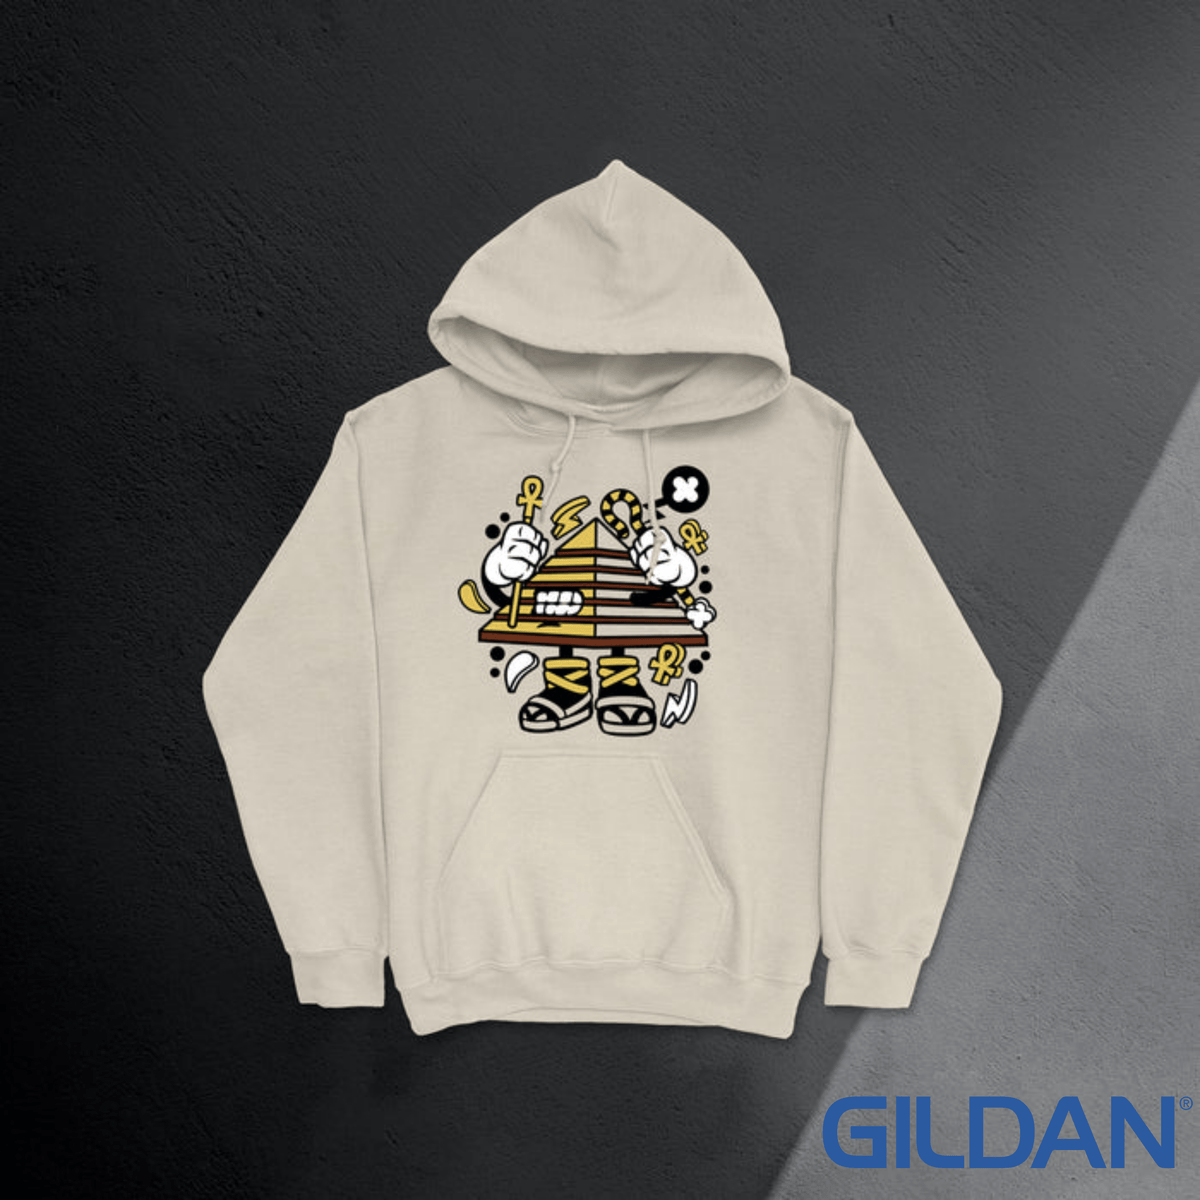 Gildan Heavy Blend Hoodies - Your Design - Custom Printed